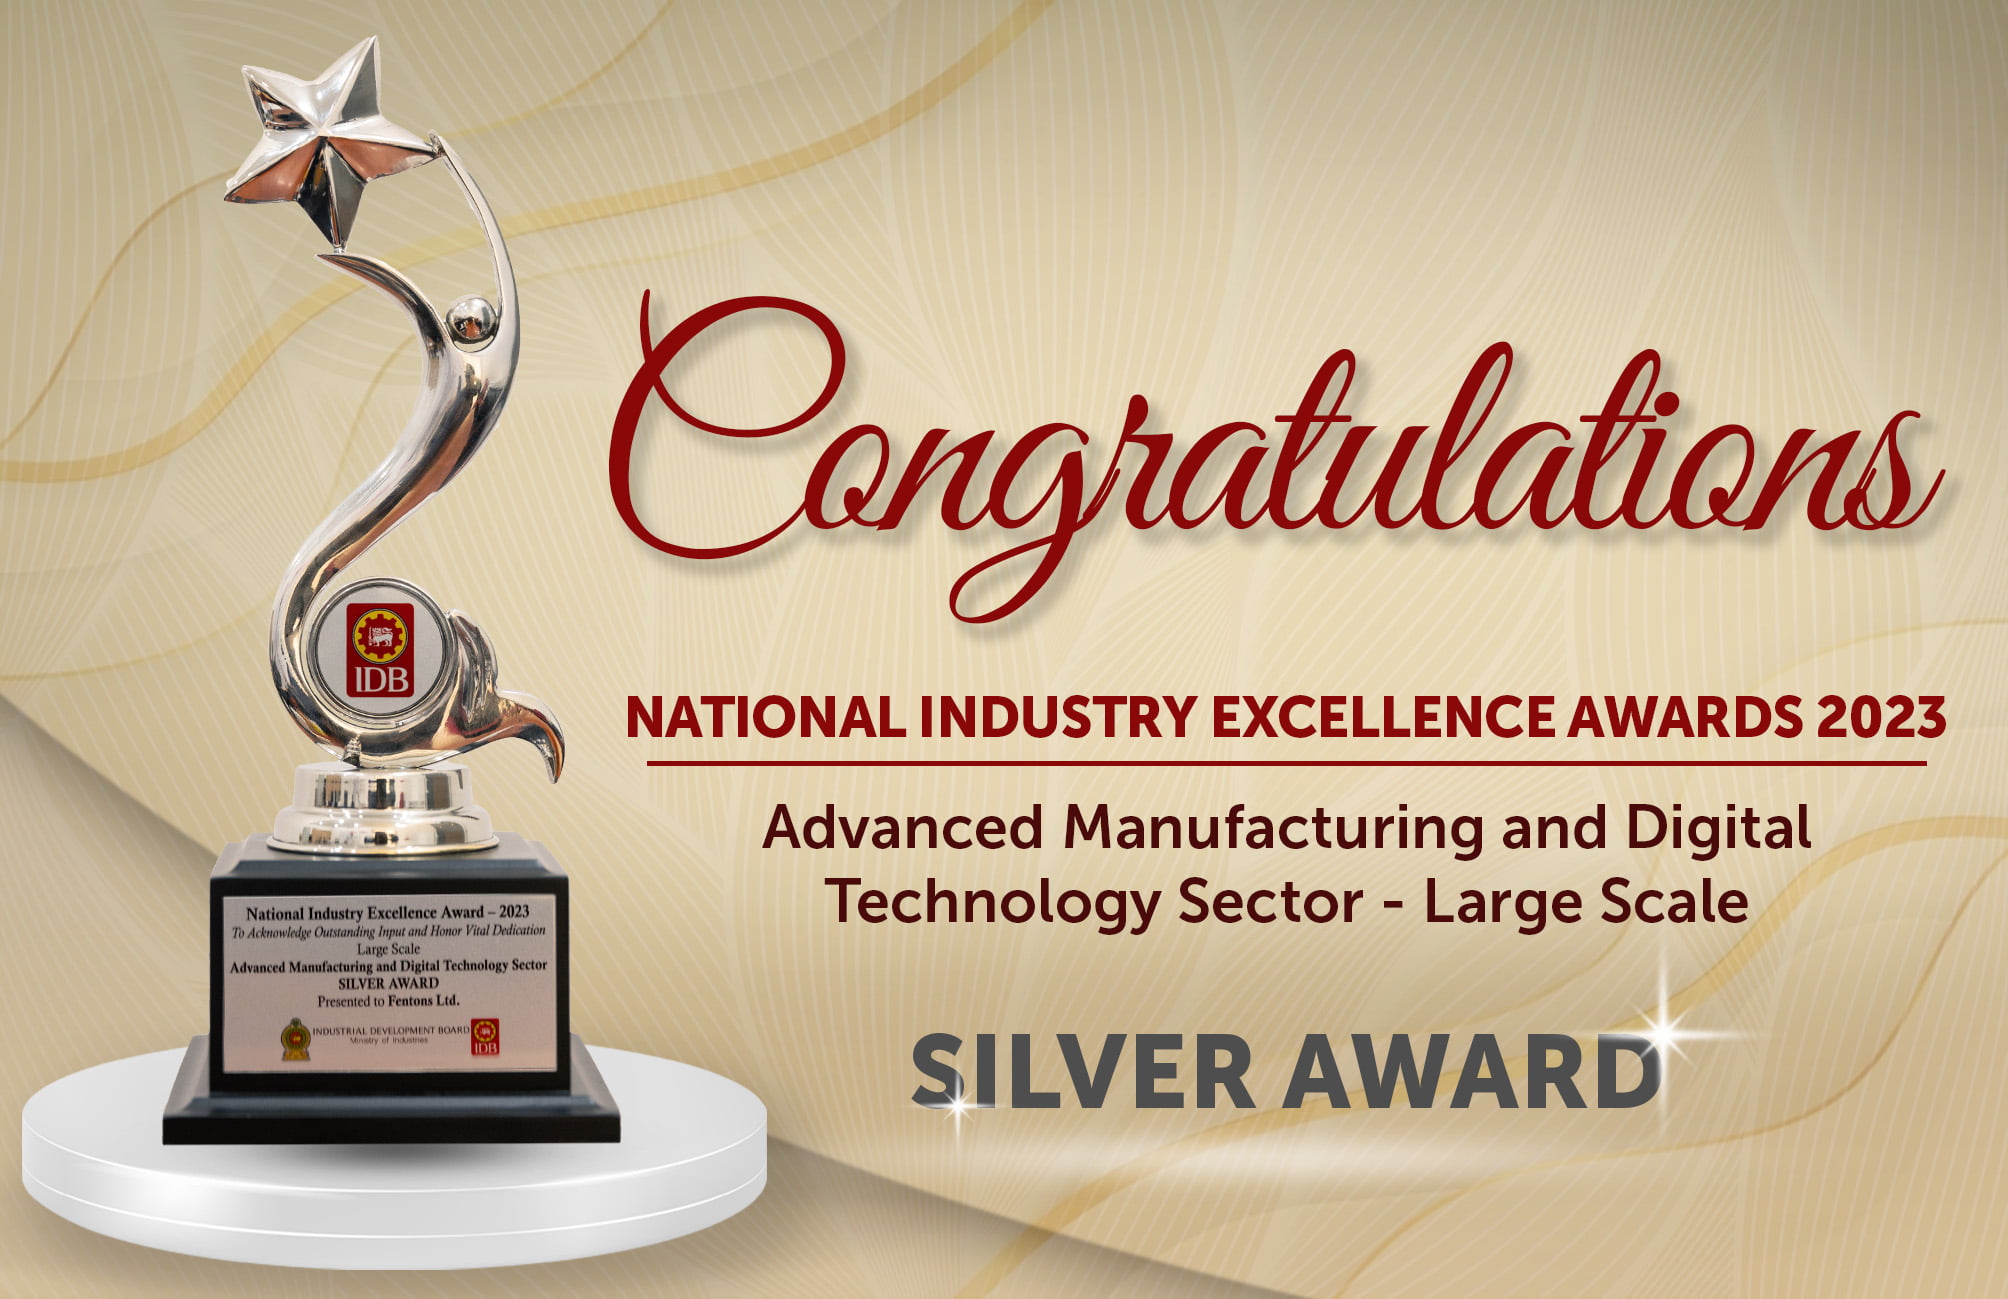 Hayleys Fentons claimed Silver Awards the esteemed National Industry Excellence Award 2023